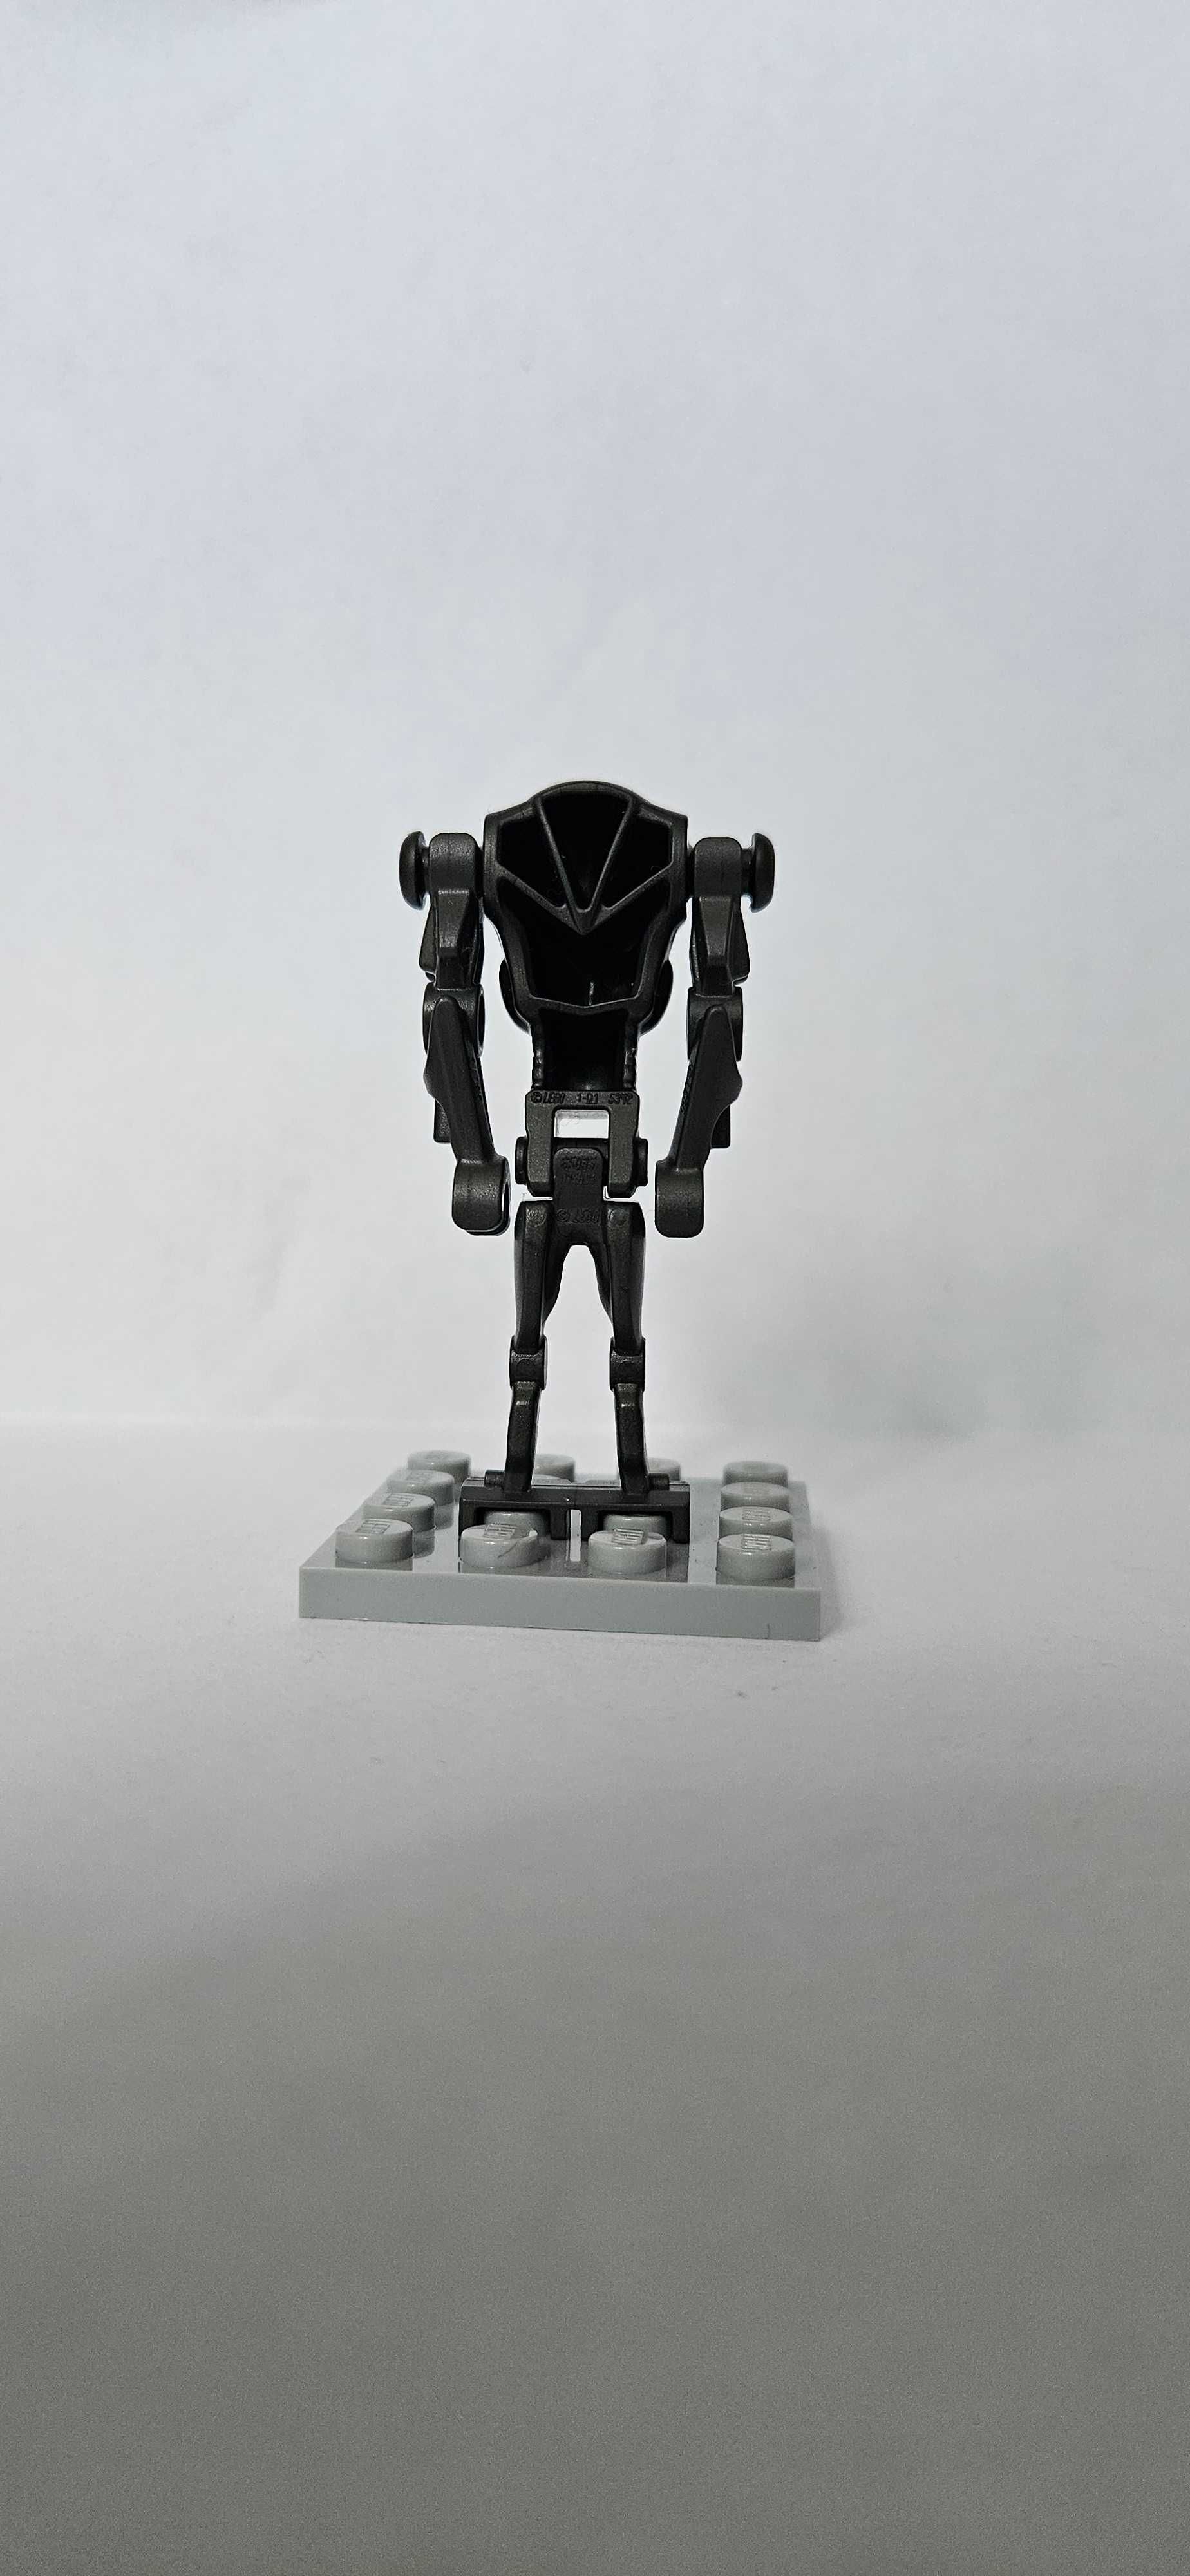 Minifigurka LEGO Star Wars - Super Battle Droid (sw1321)